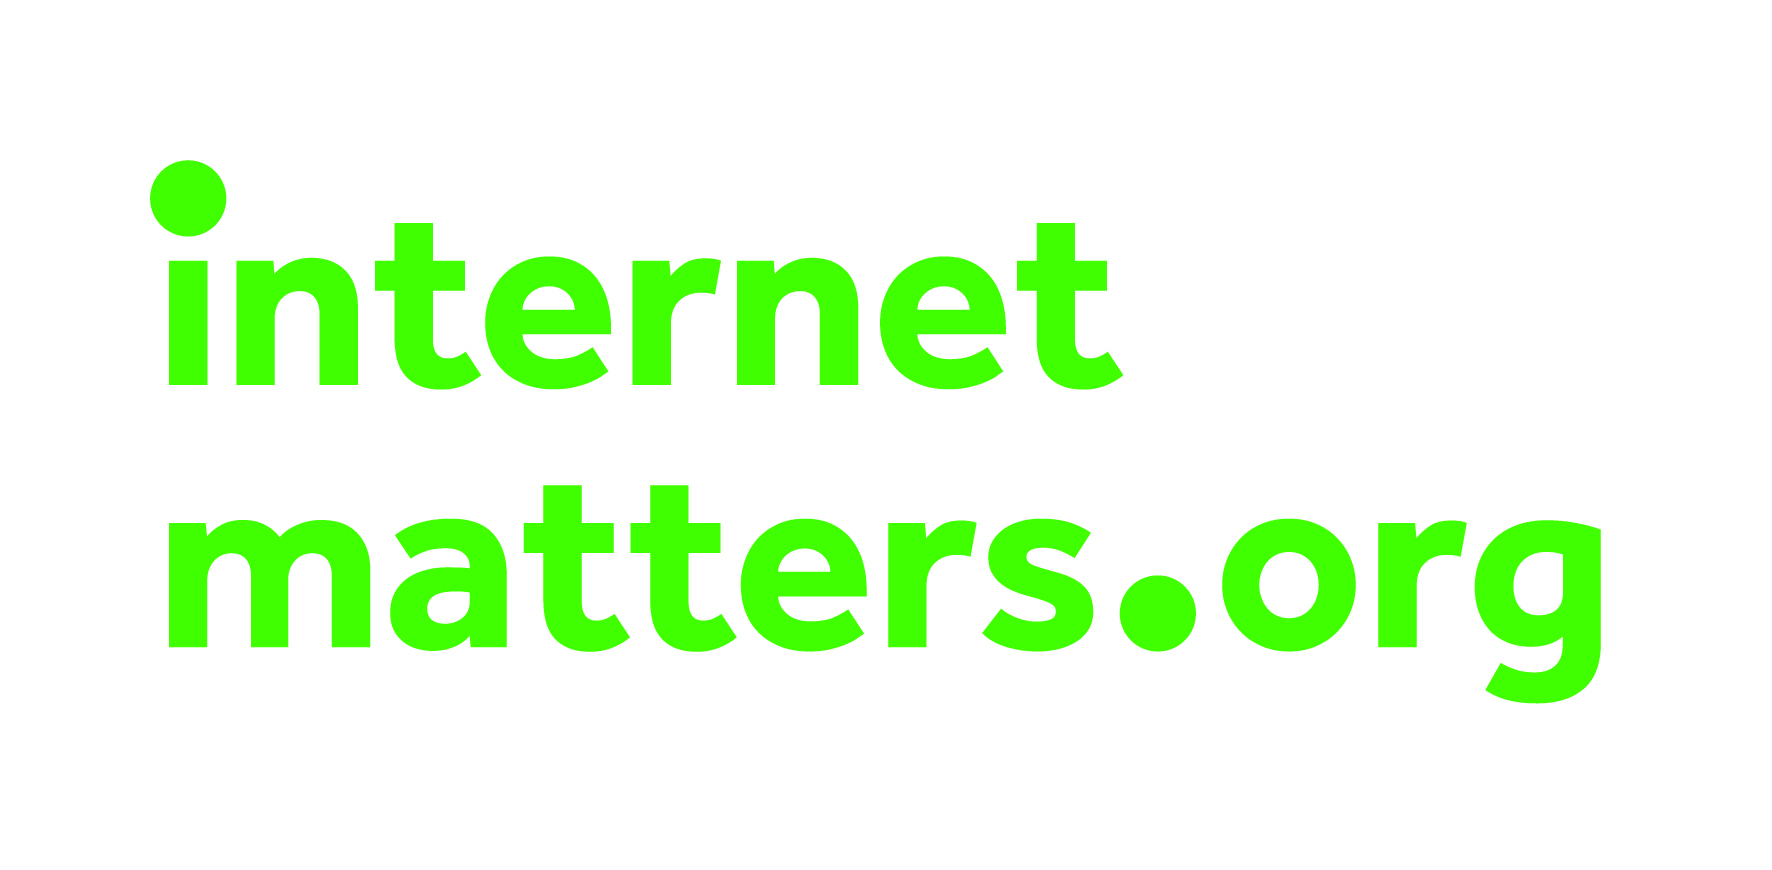 internetmatters.org